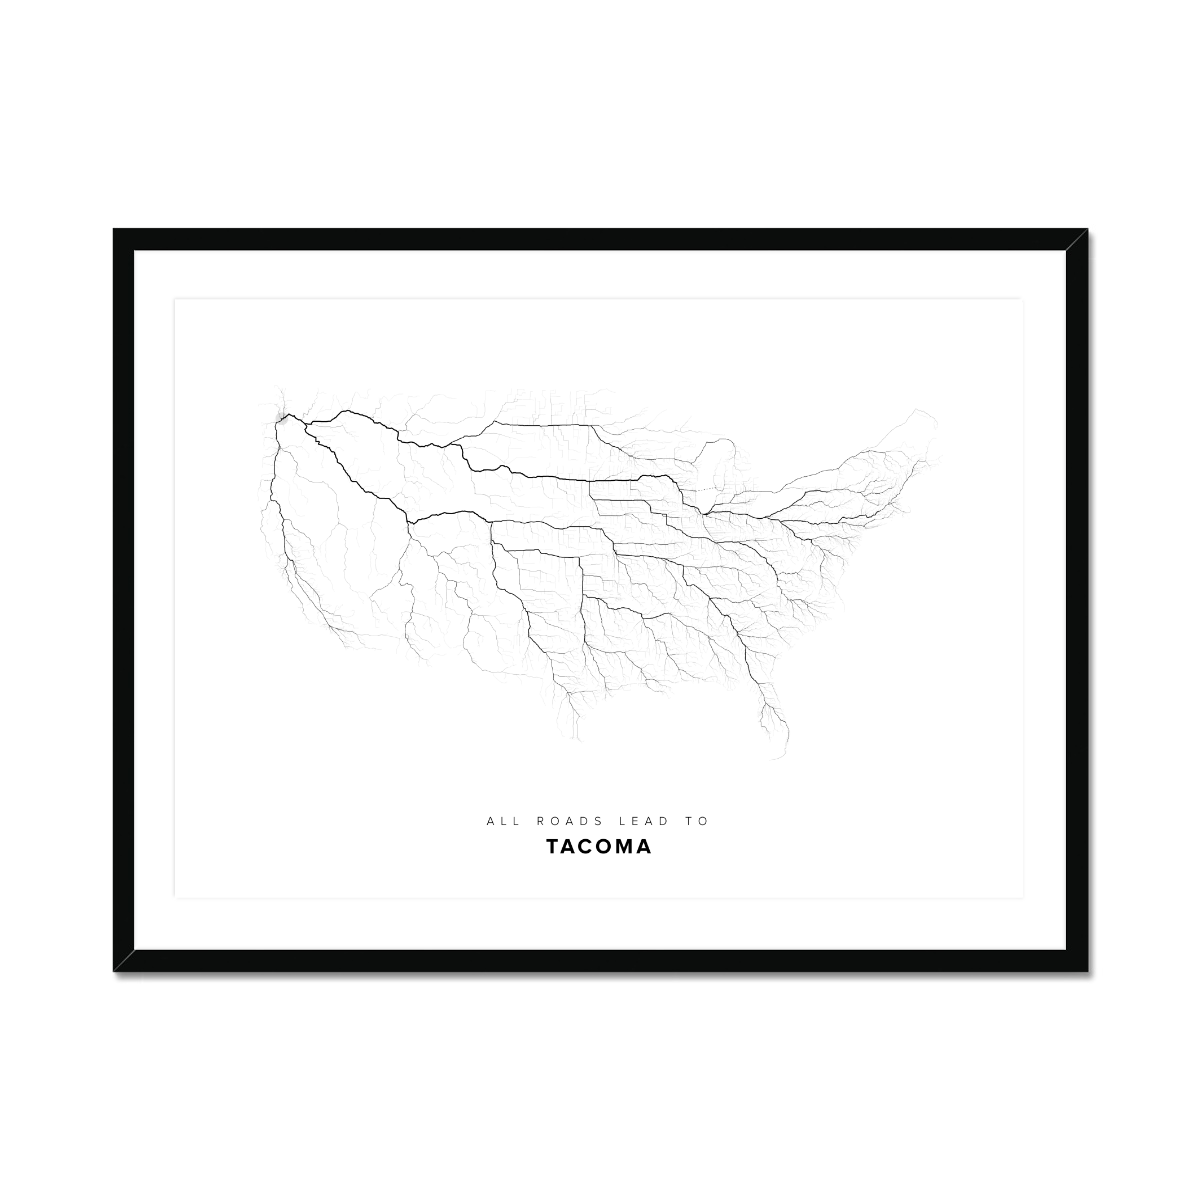 All roads lead to Tacoma (United States of America) Fine Art Map Print